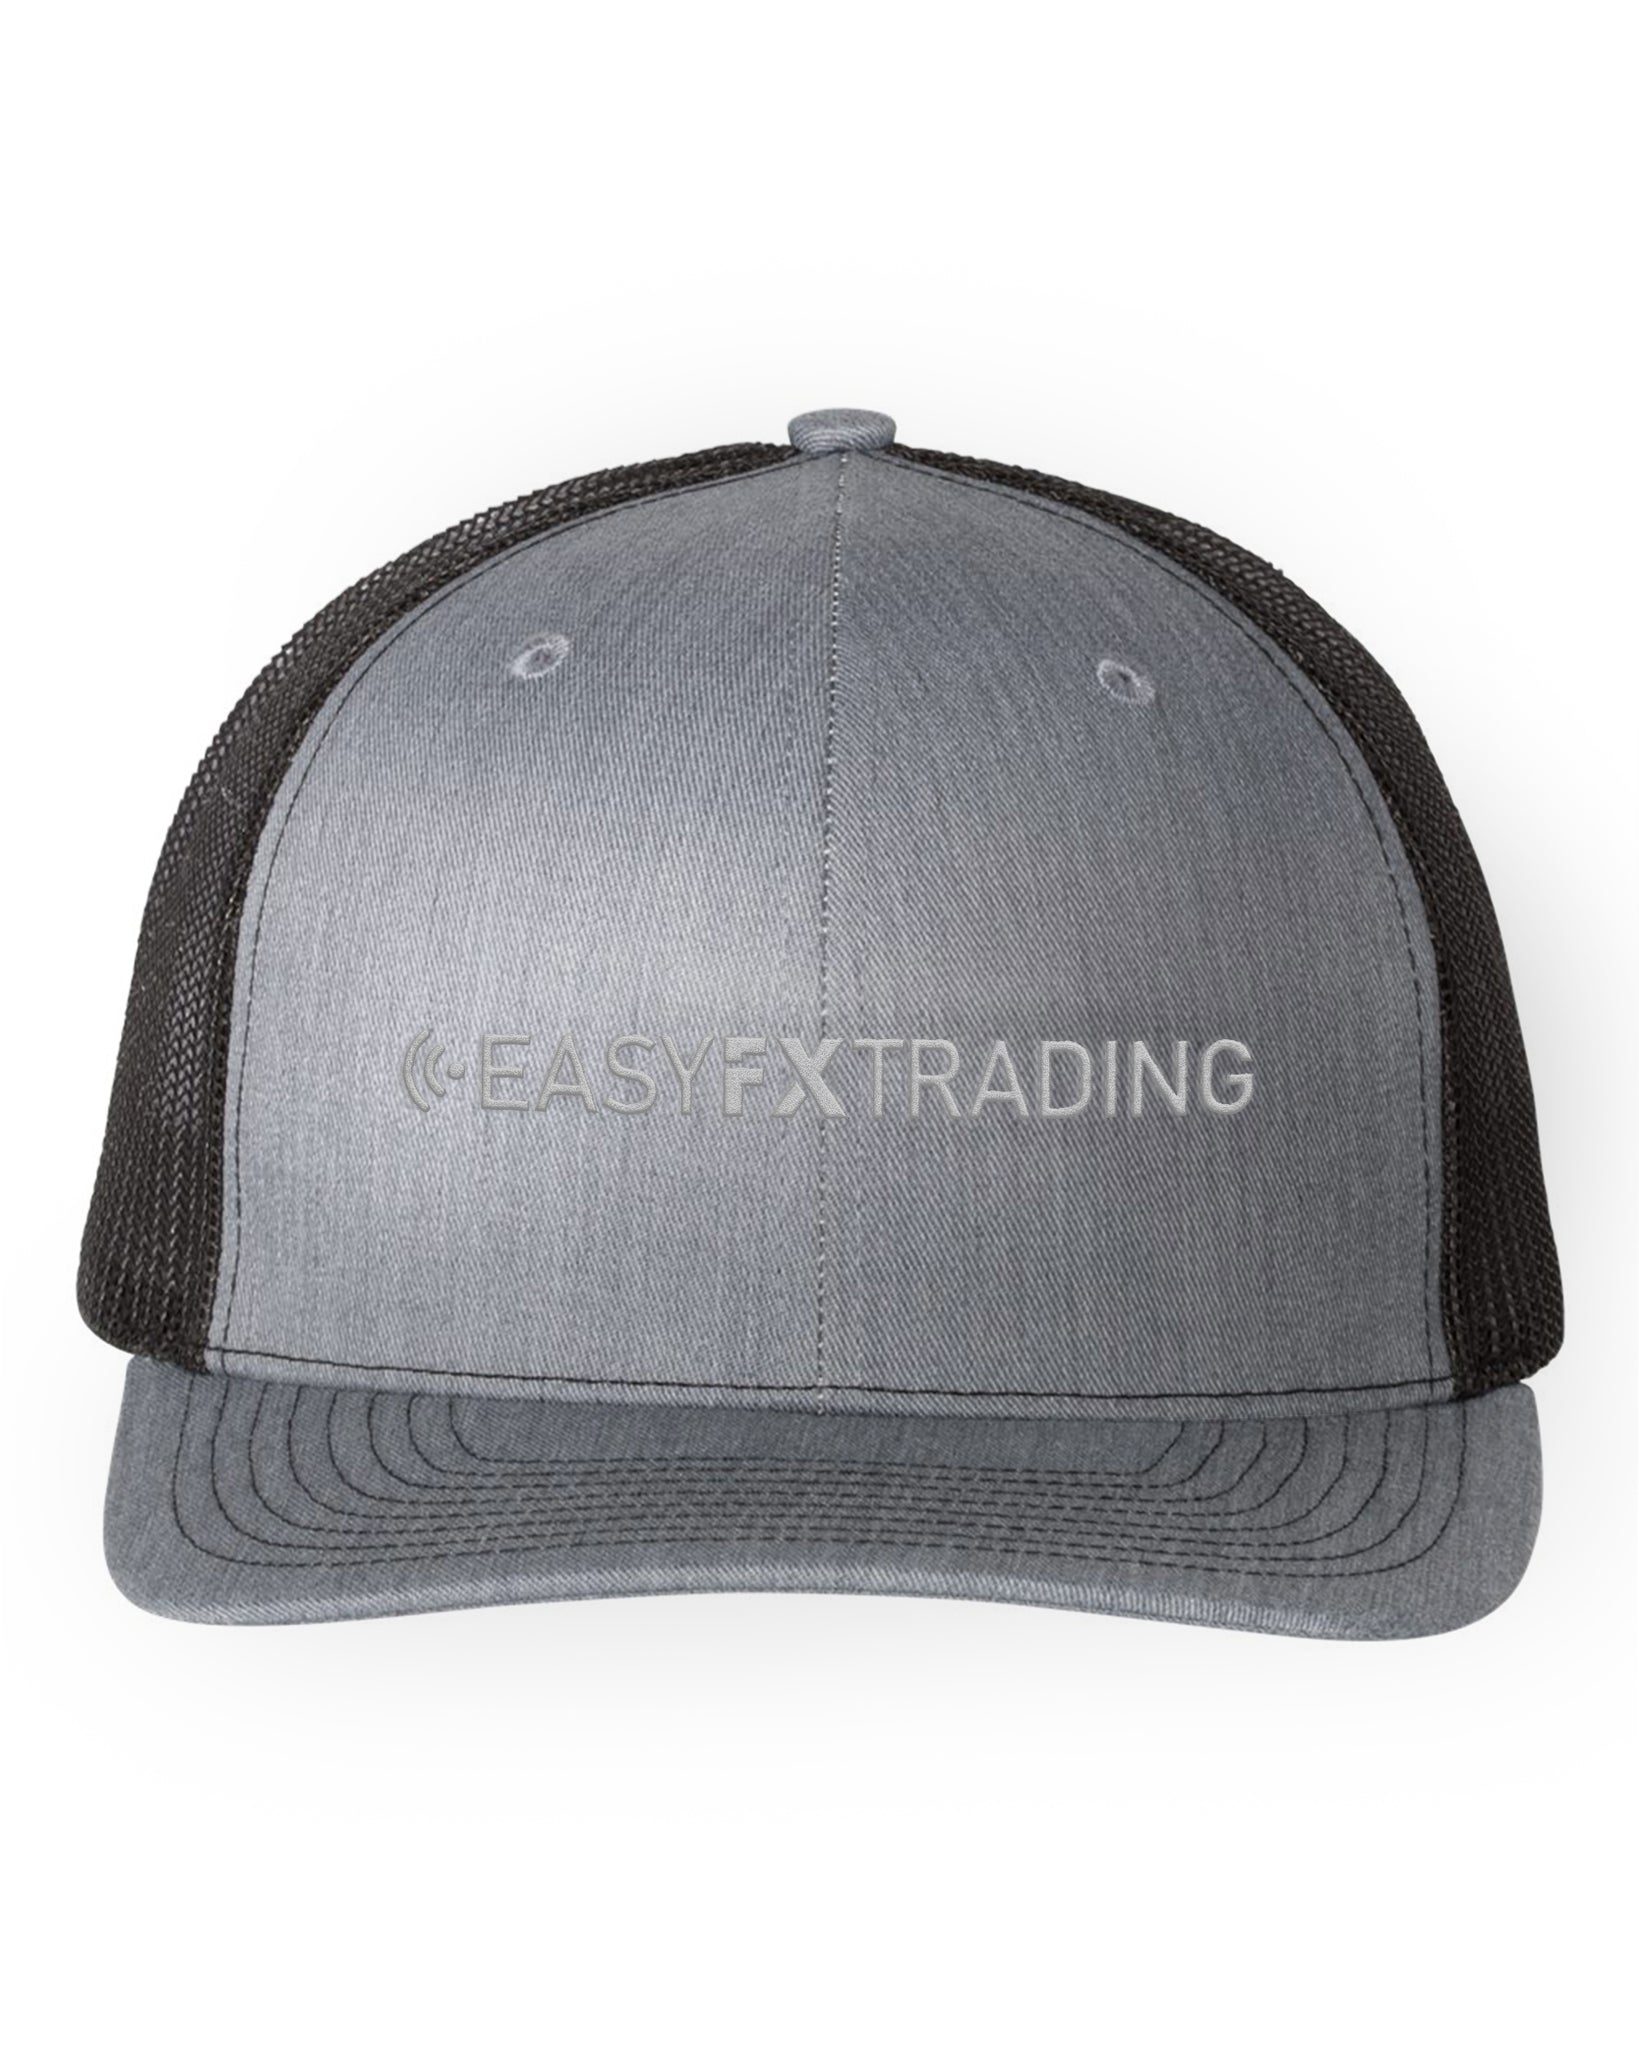 Logo-Long-Gray on Black & Gray Hat